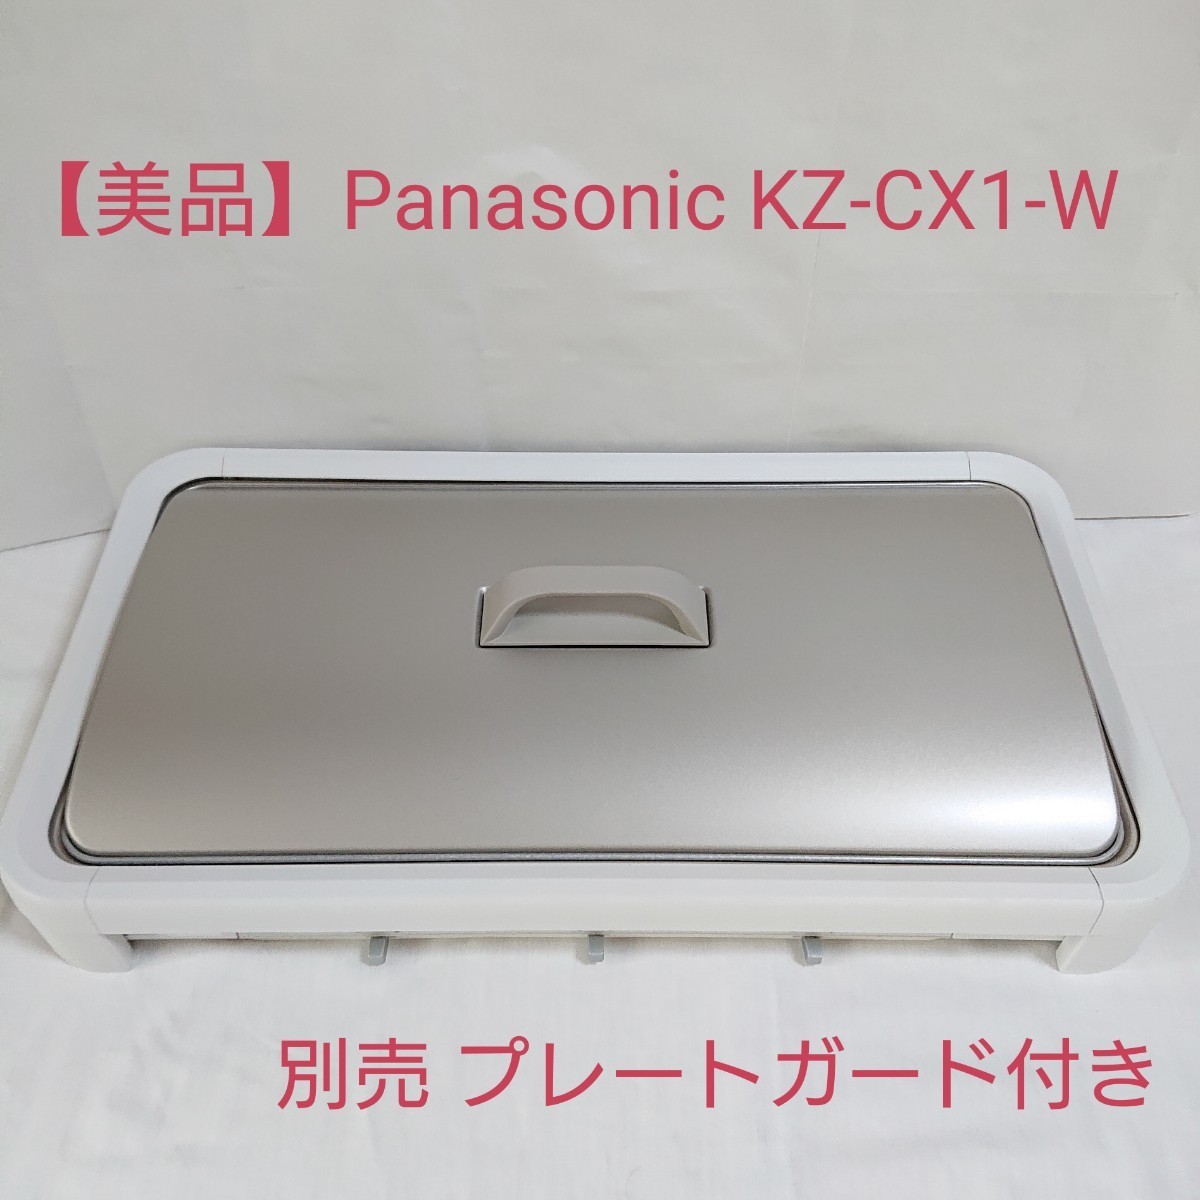 Panasonic IHデイリーホットプレート KZ-CX1-W